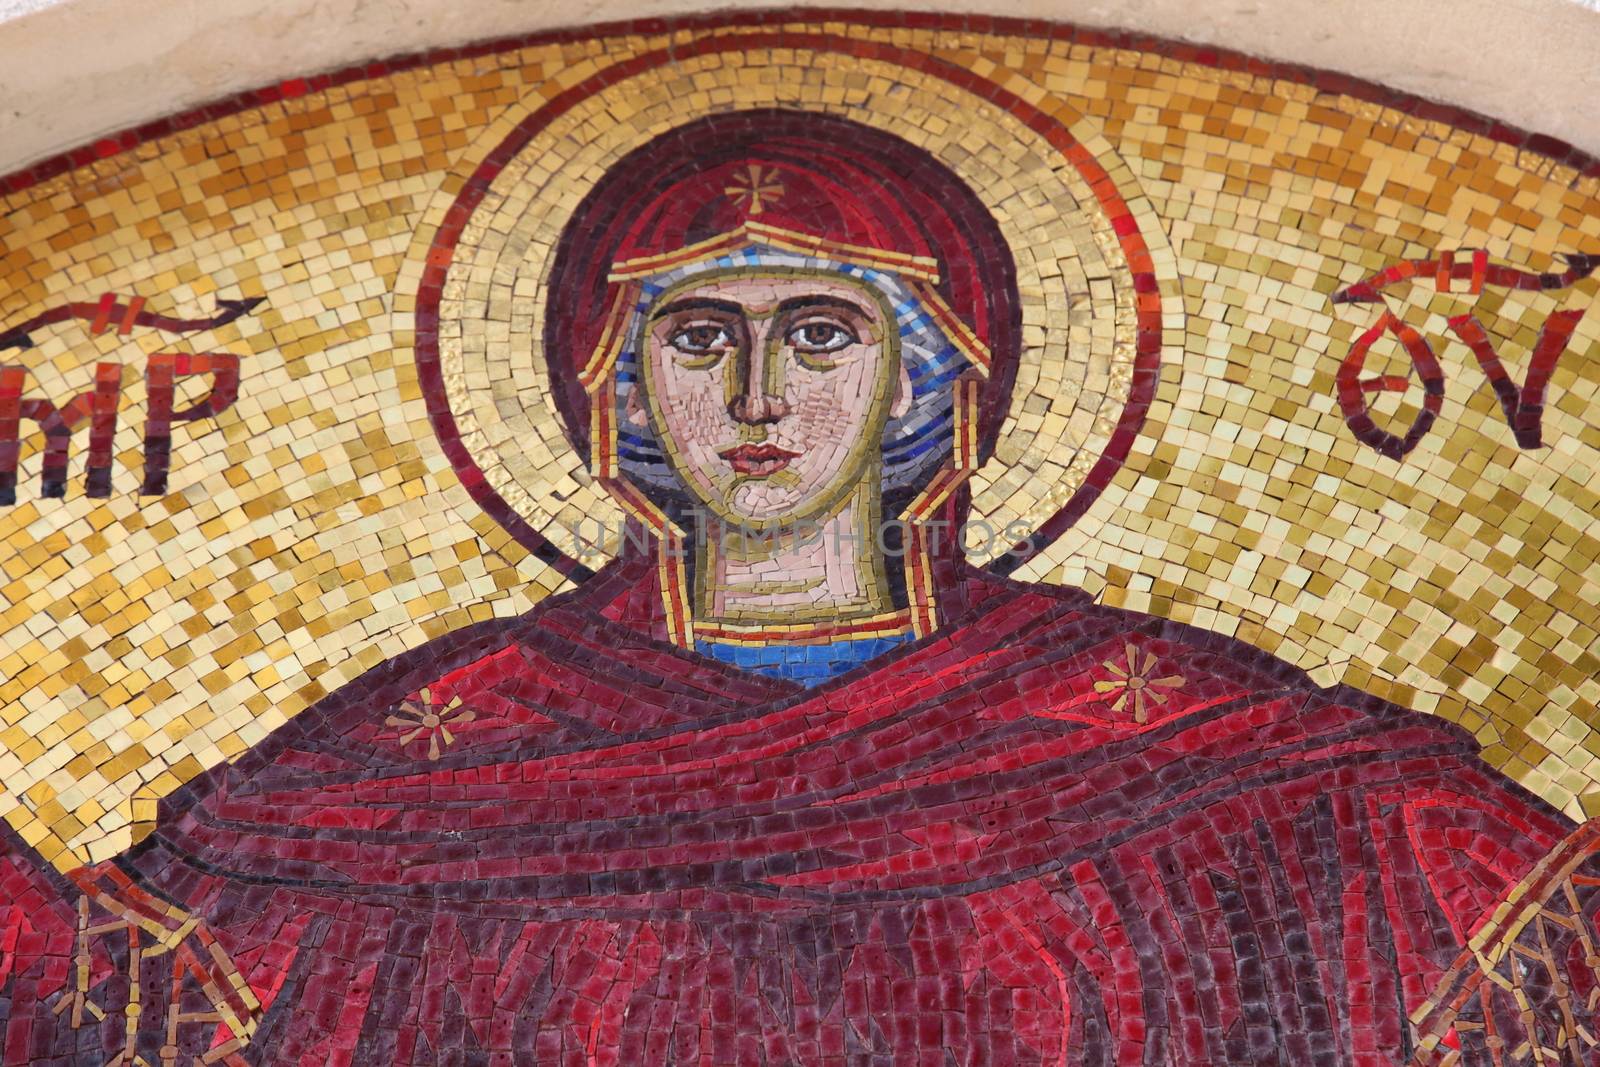 Virgin Mary - mosaic icon in Orthodox Christian church in Budva, Montenegro